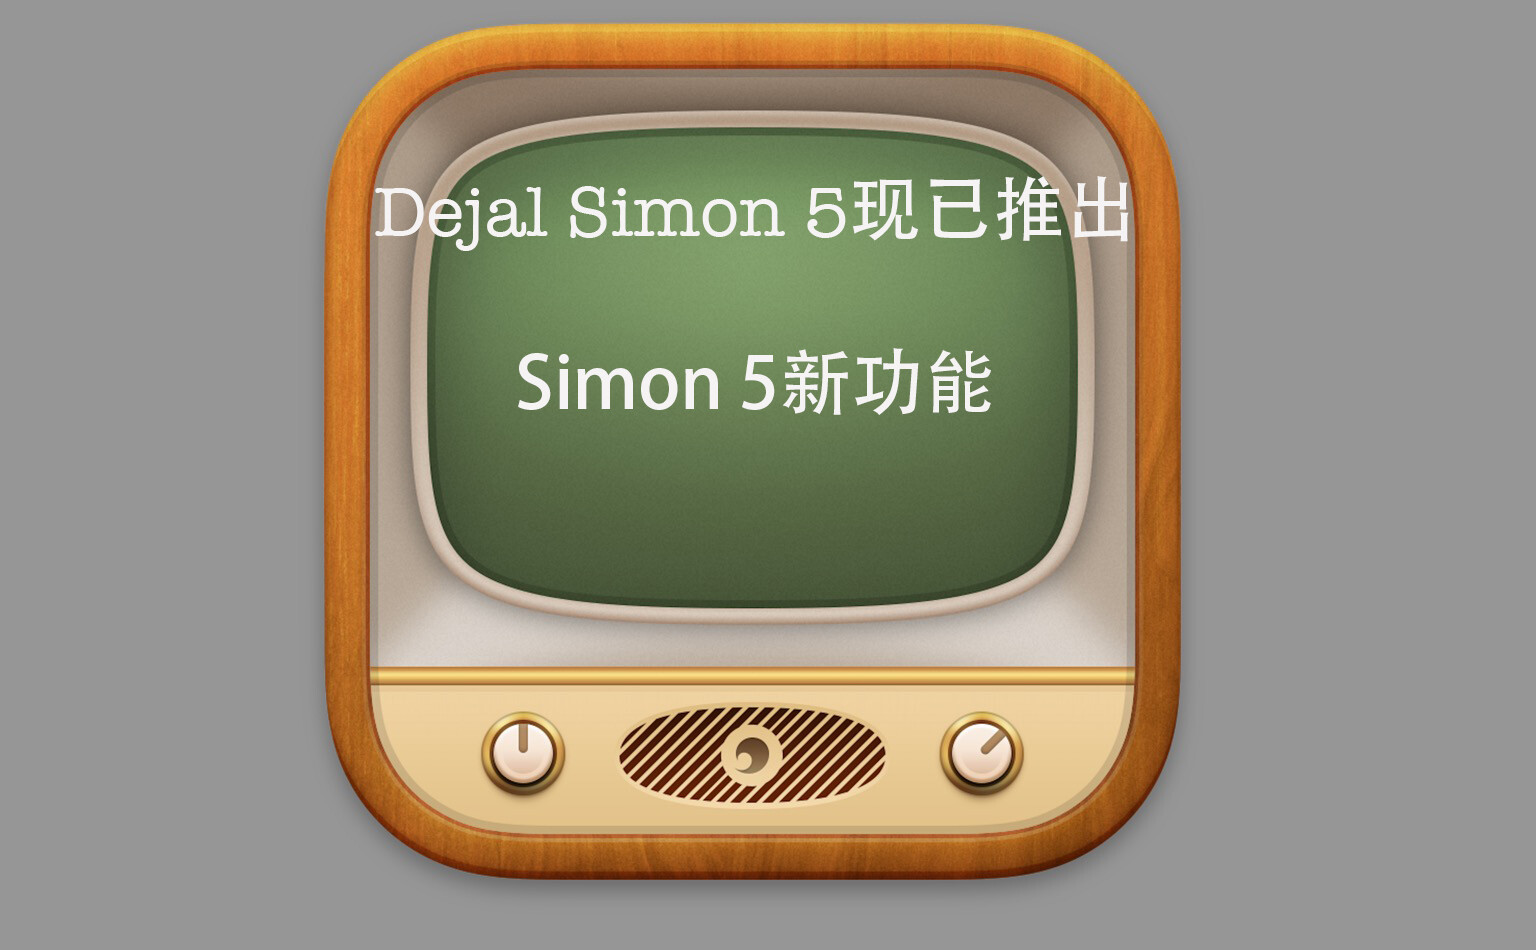 Dejal Simon 5现已推出，有哪些新功能？ Simon 5新增功能介绍